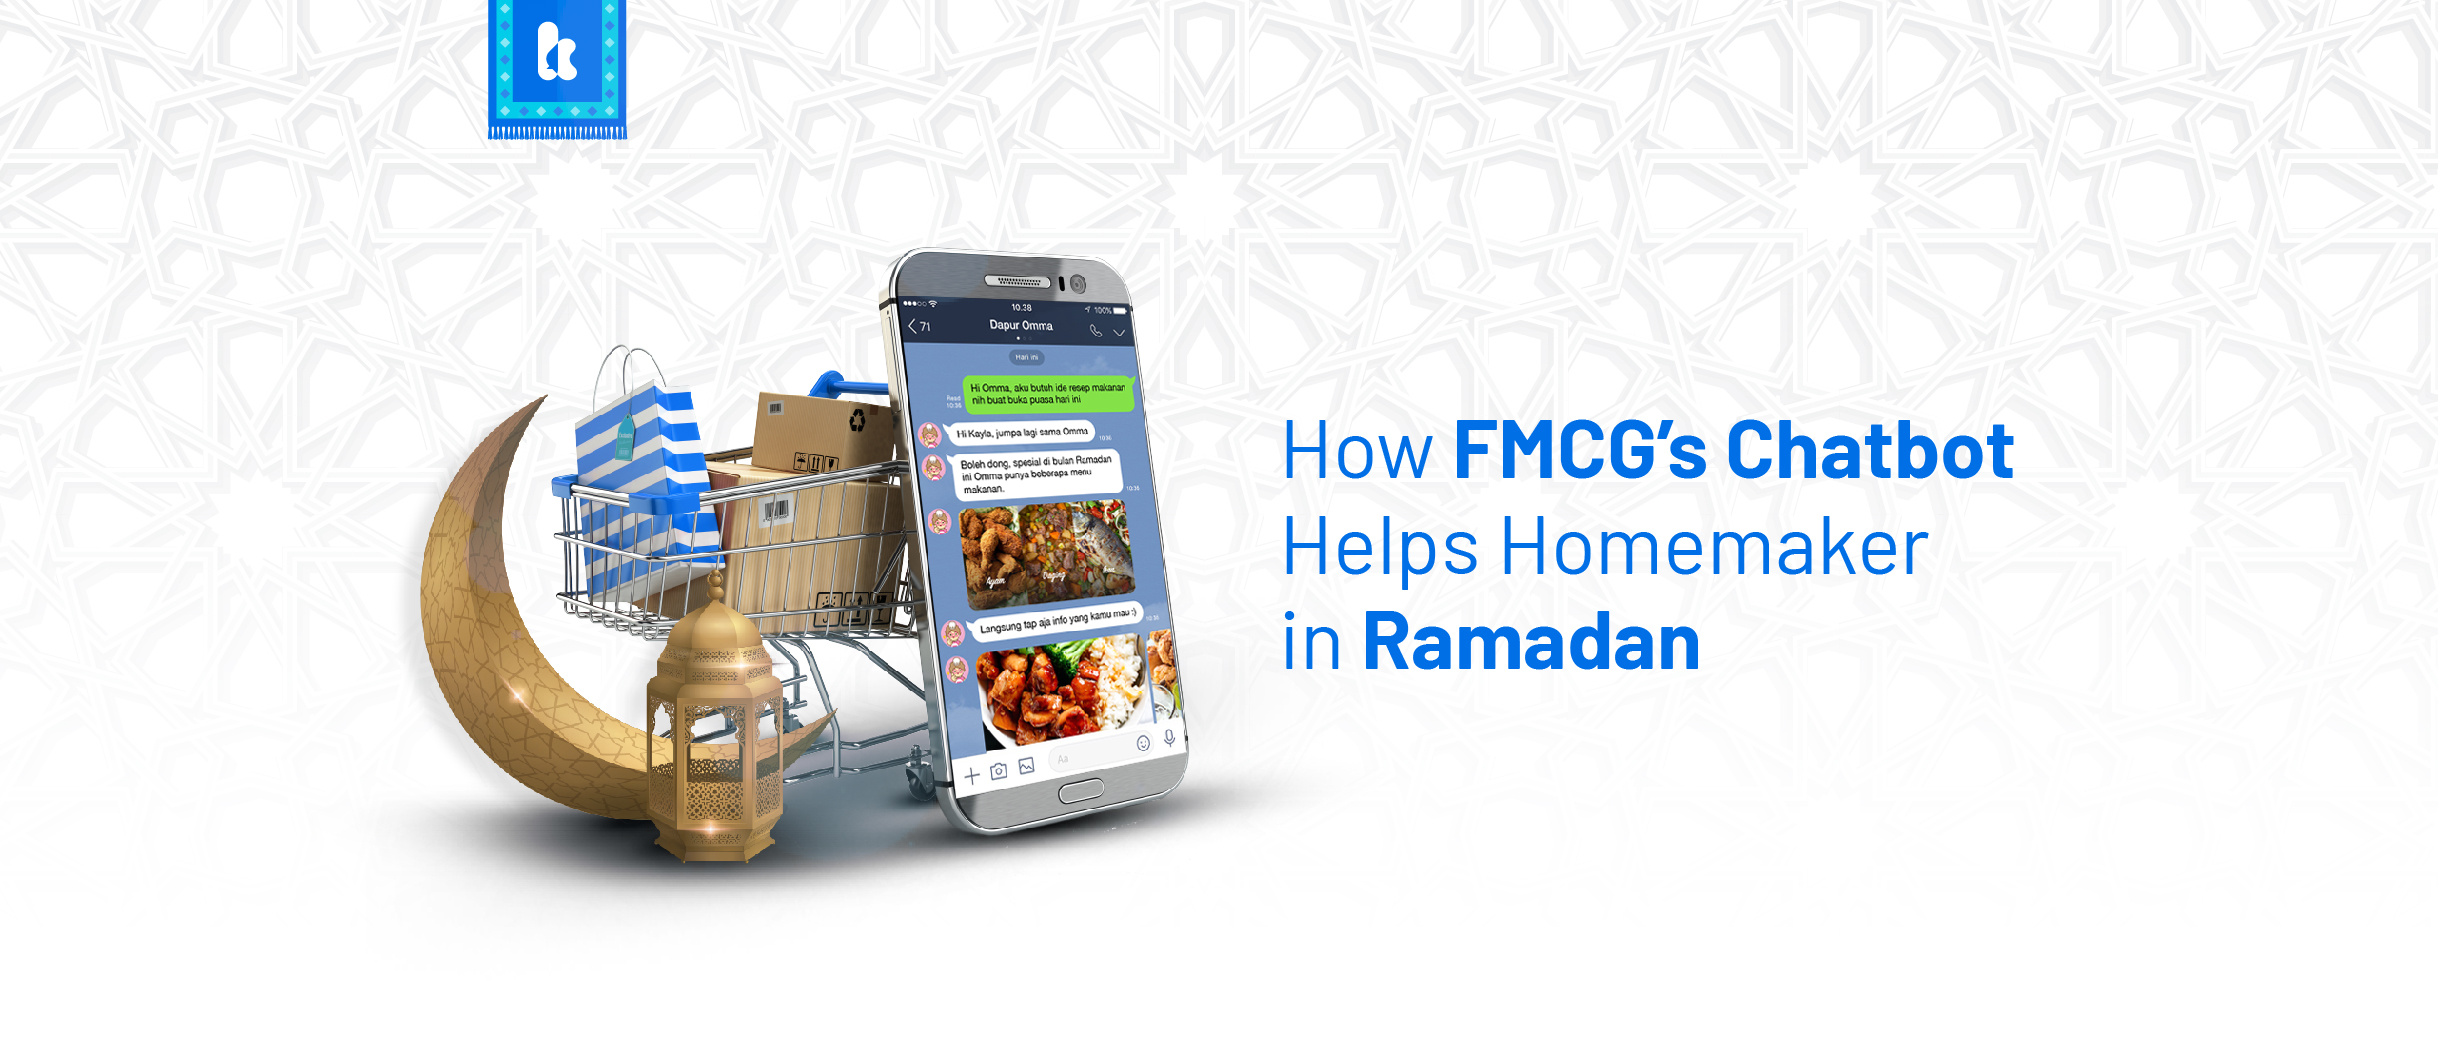 How FMCG’s Chatbot Helps Homemaker in Ramadan